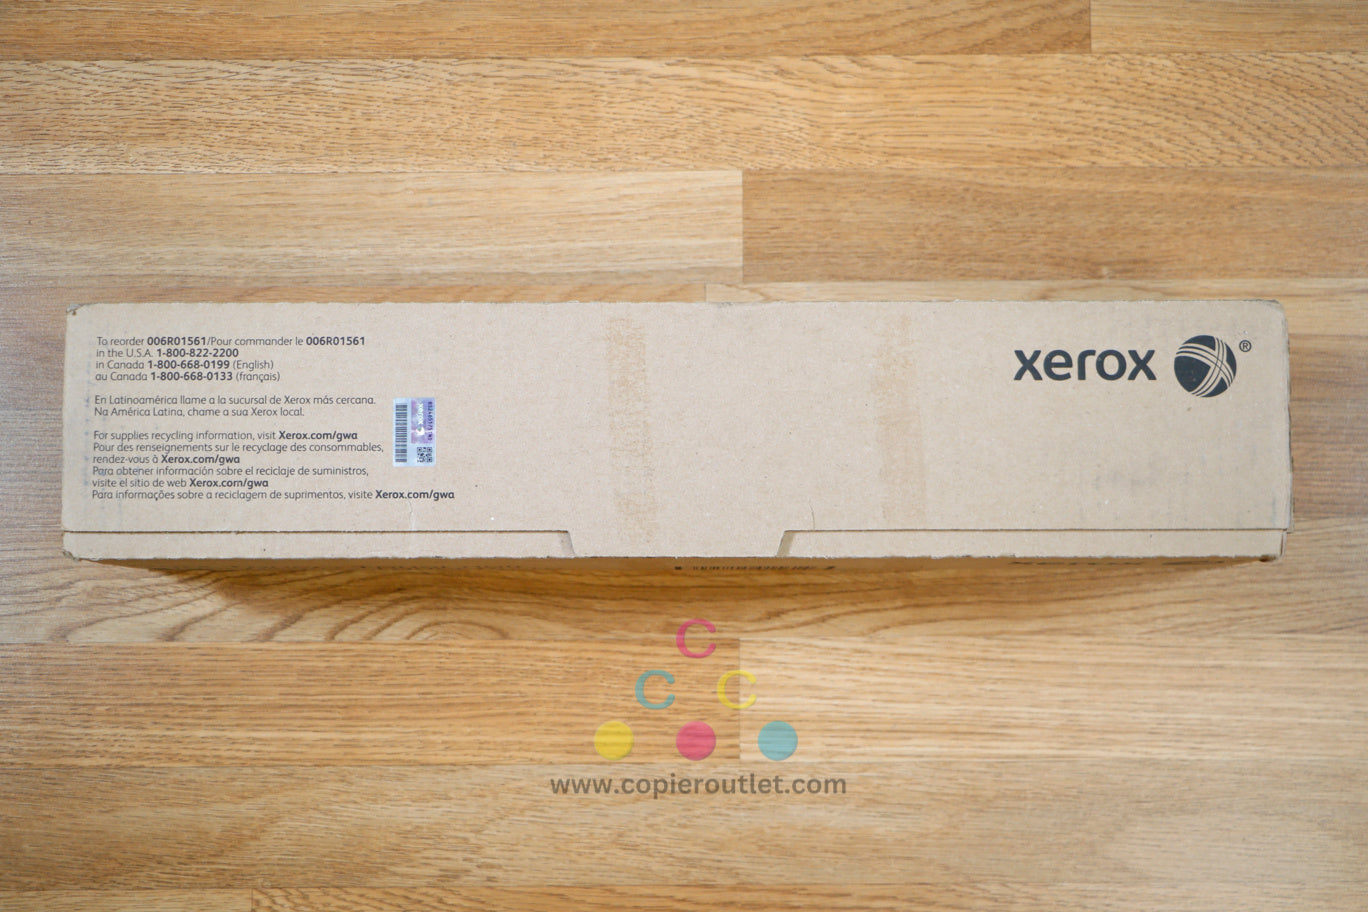 Genuine Xerox 006R01561 Black Toner Cartridge For D95,D95A,D110,D110P,D125,D125P